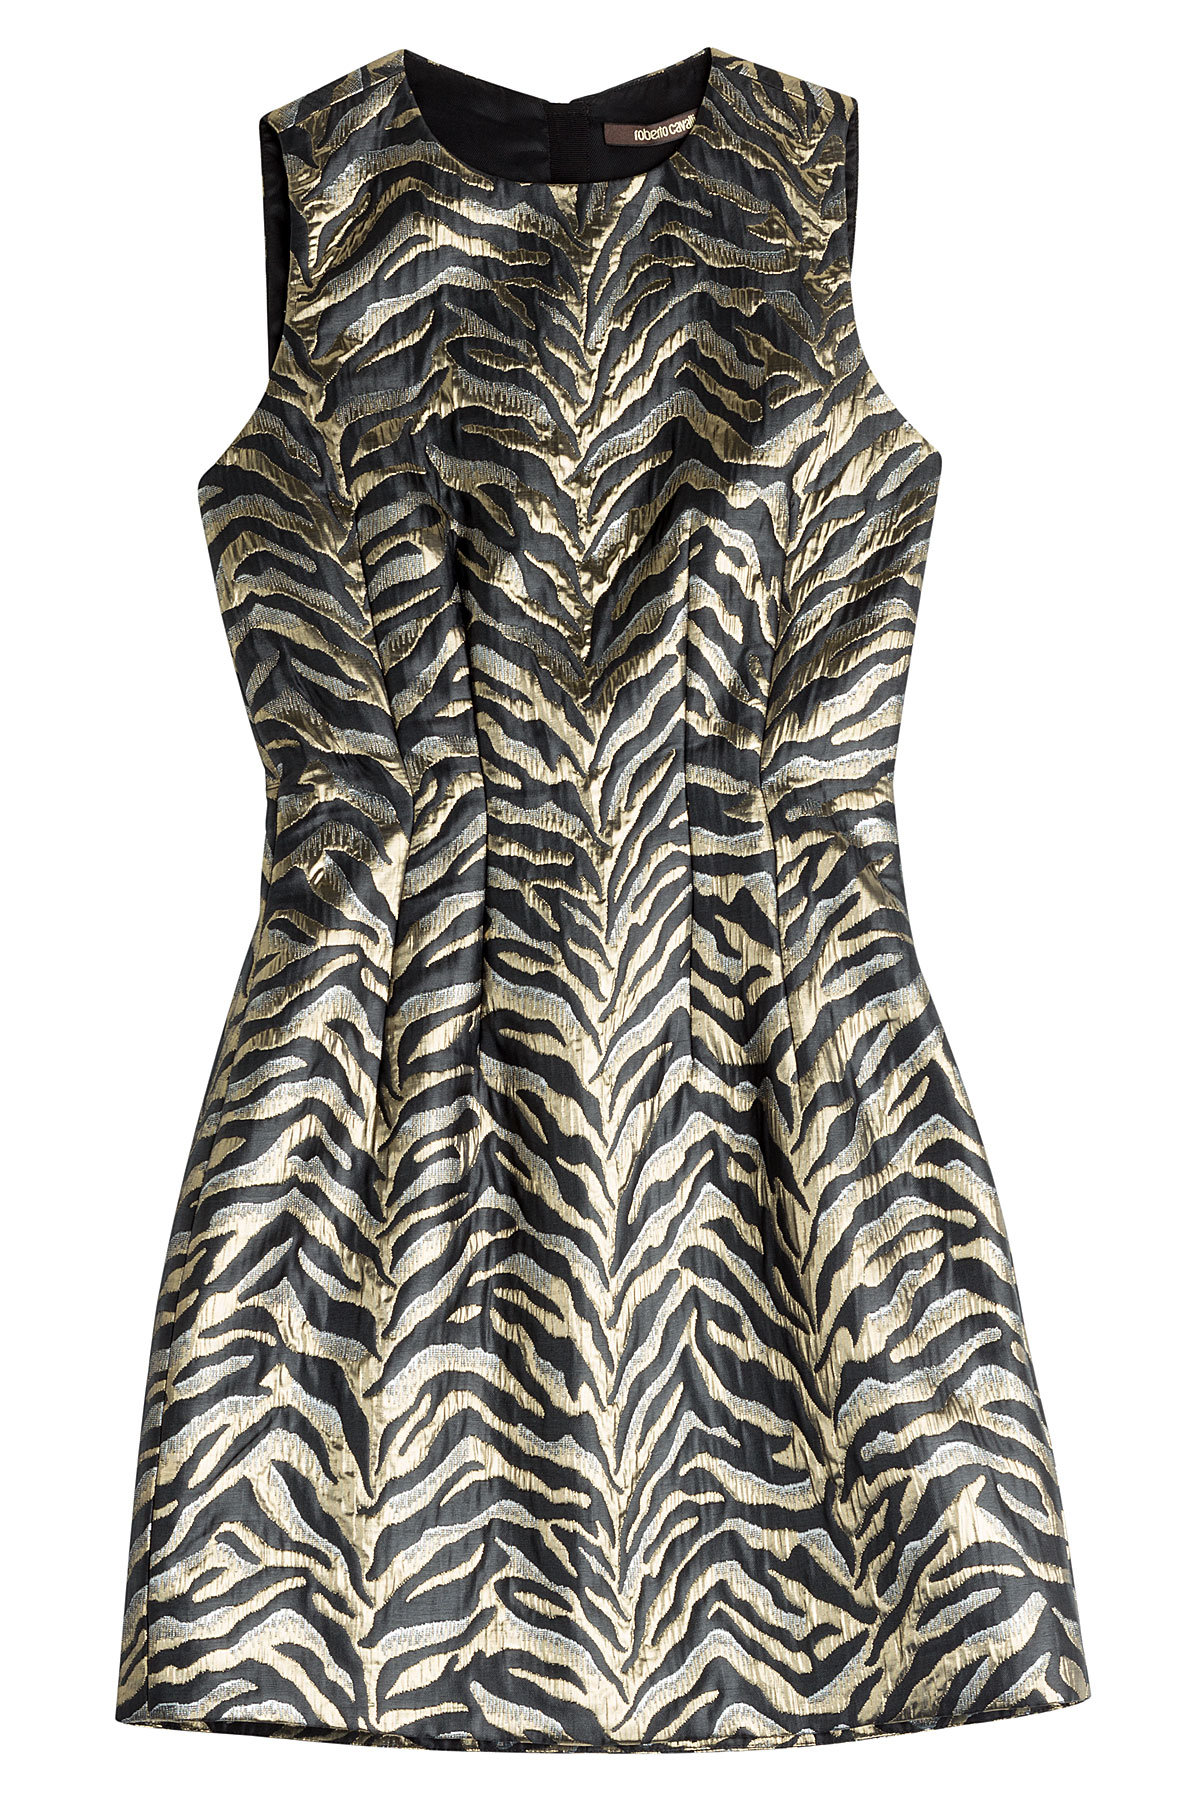 Roberto Cavalli - Zebra Print Dress